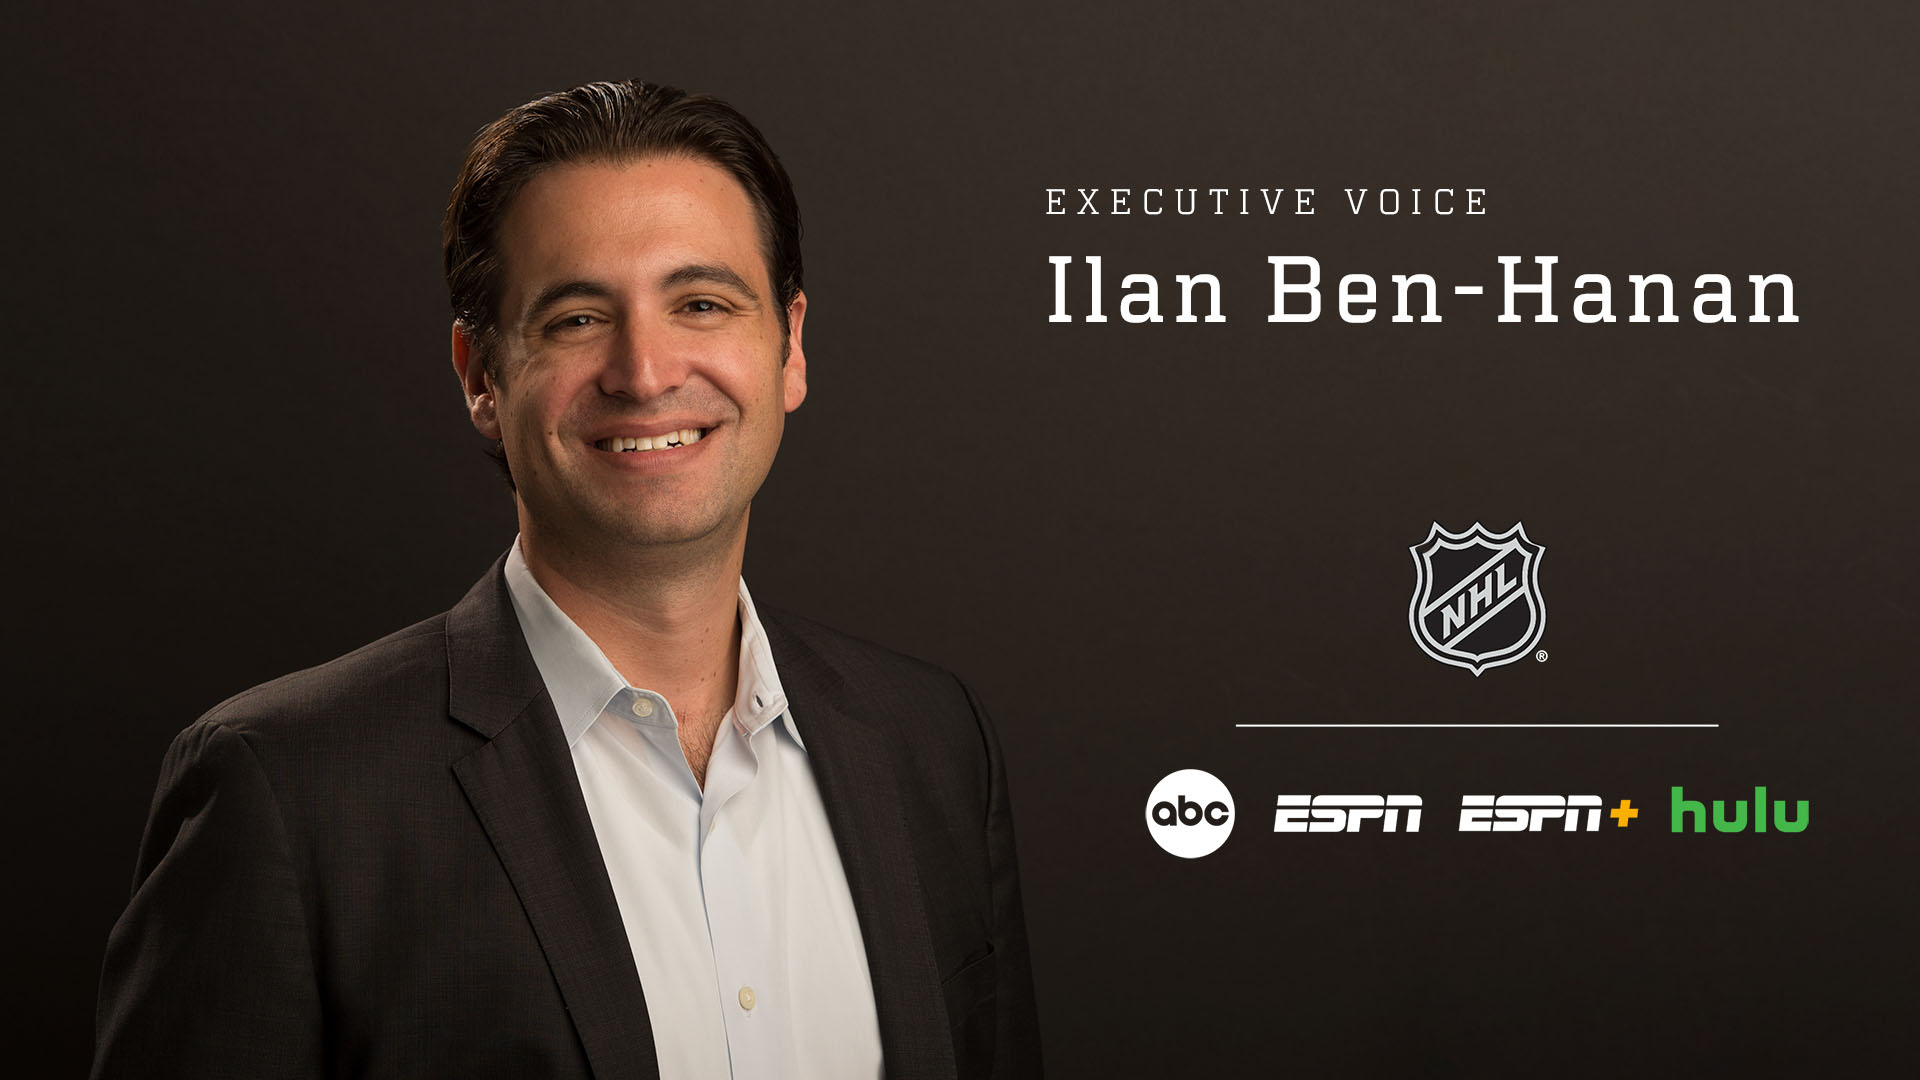 Executive Voice ESPN SVP Ilan Ben-Hanan On The NHLs Return To The Walt Disney Company